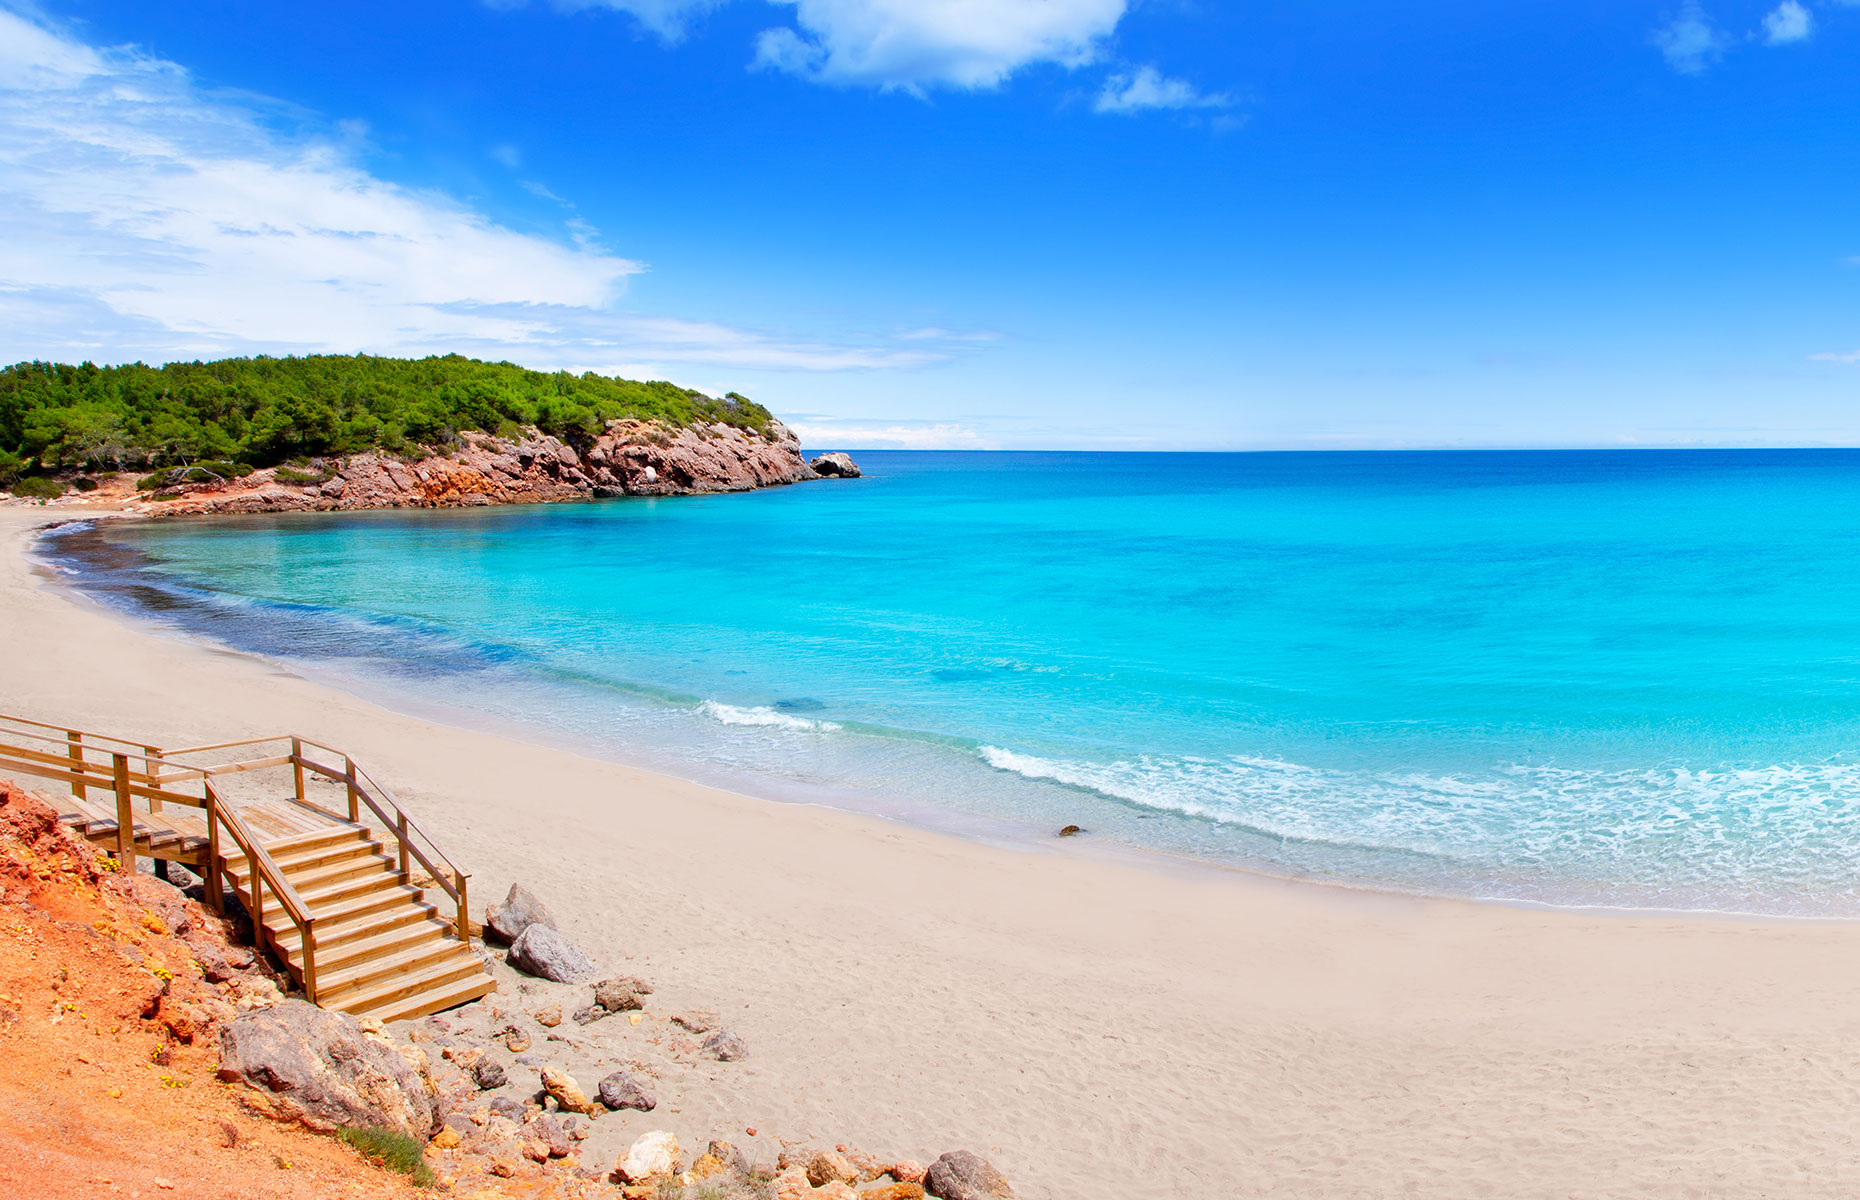 Cala Nova beach (Image: lunamarina/Shutterstock)